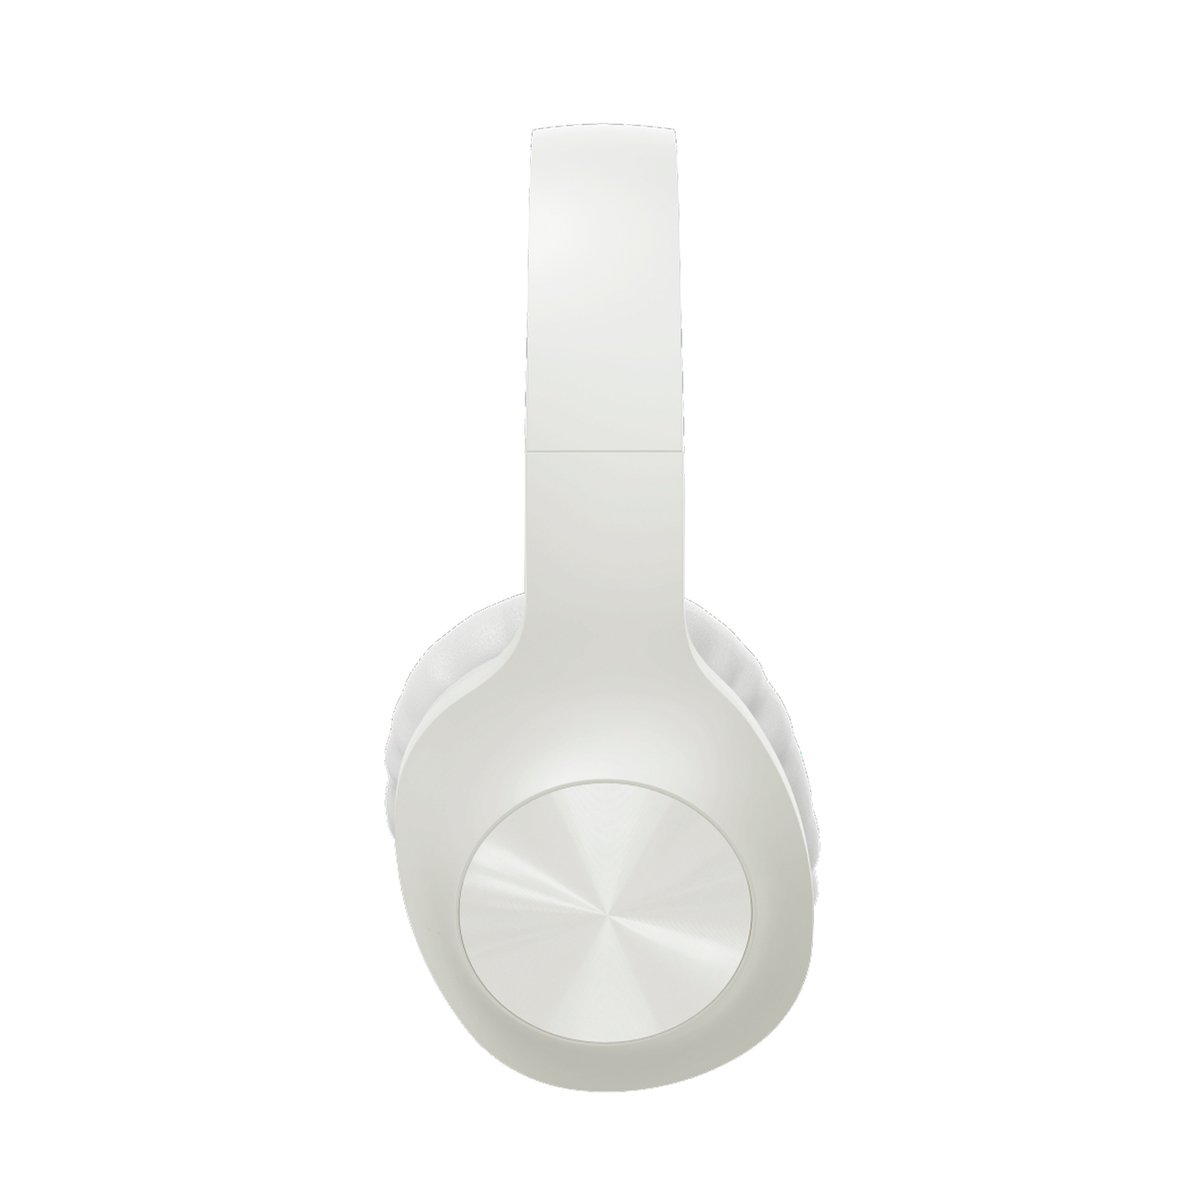 Hama Calypso Bluetooth headphones (184062), over-ear, microphone, bass booster, White